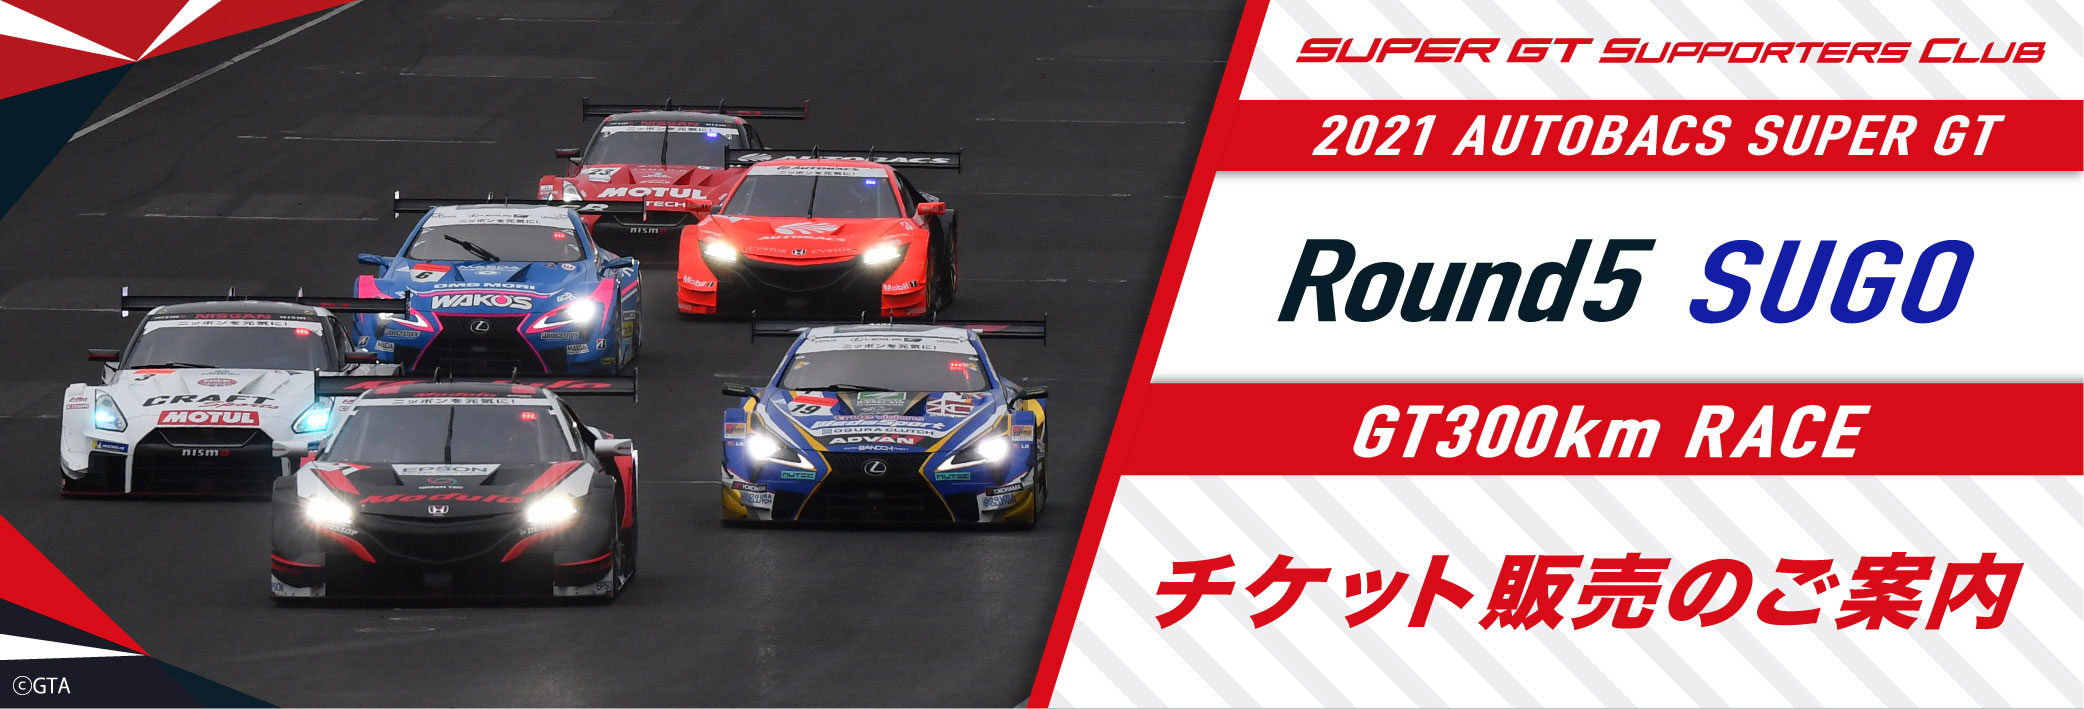 2021 AUTOBACS SUPER GT Round4 MOTEGI GT 300km RACE チケット販売のご案内